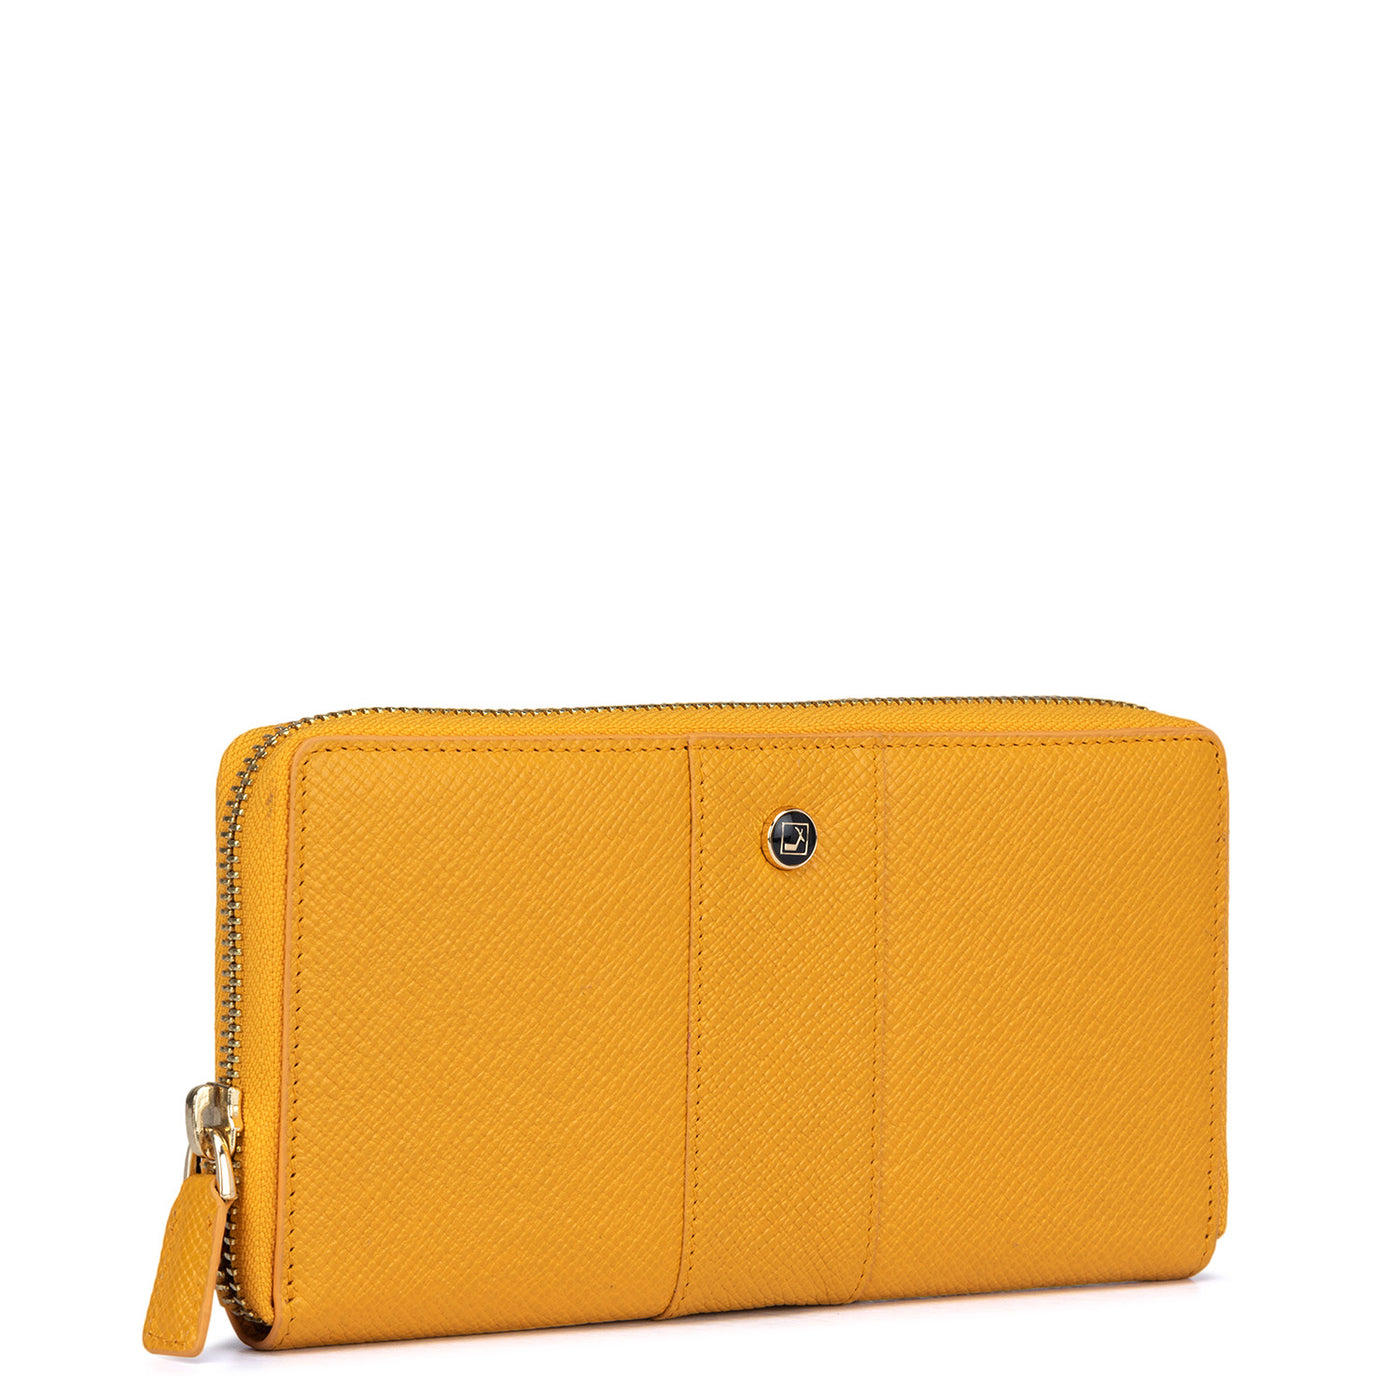 Franzy Leather Ladies Wallet - Mustard